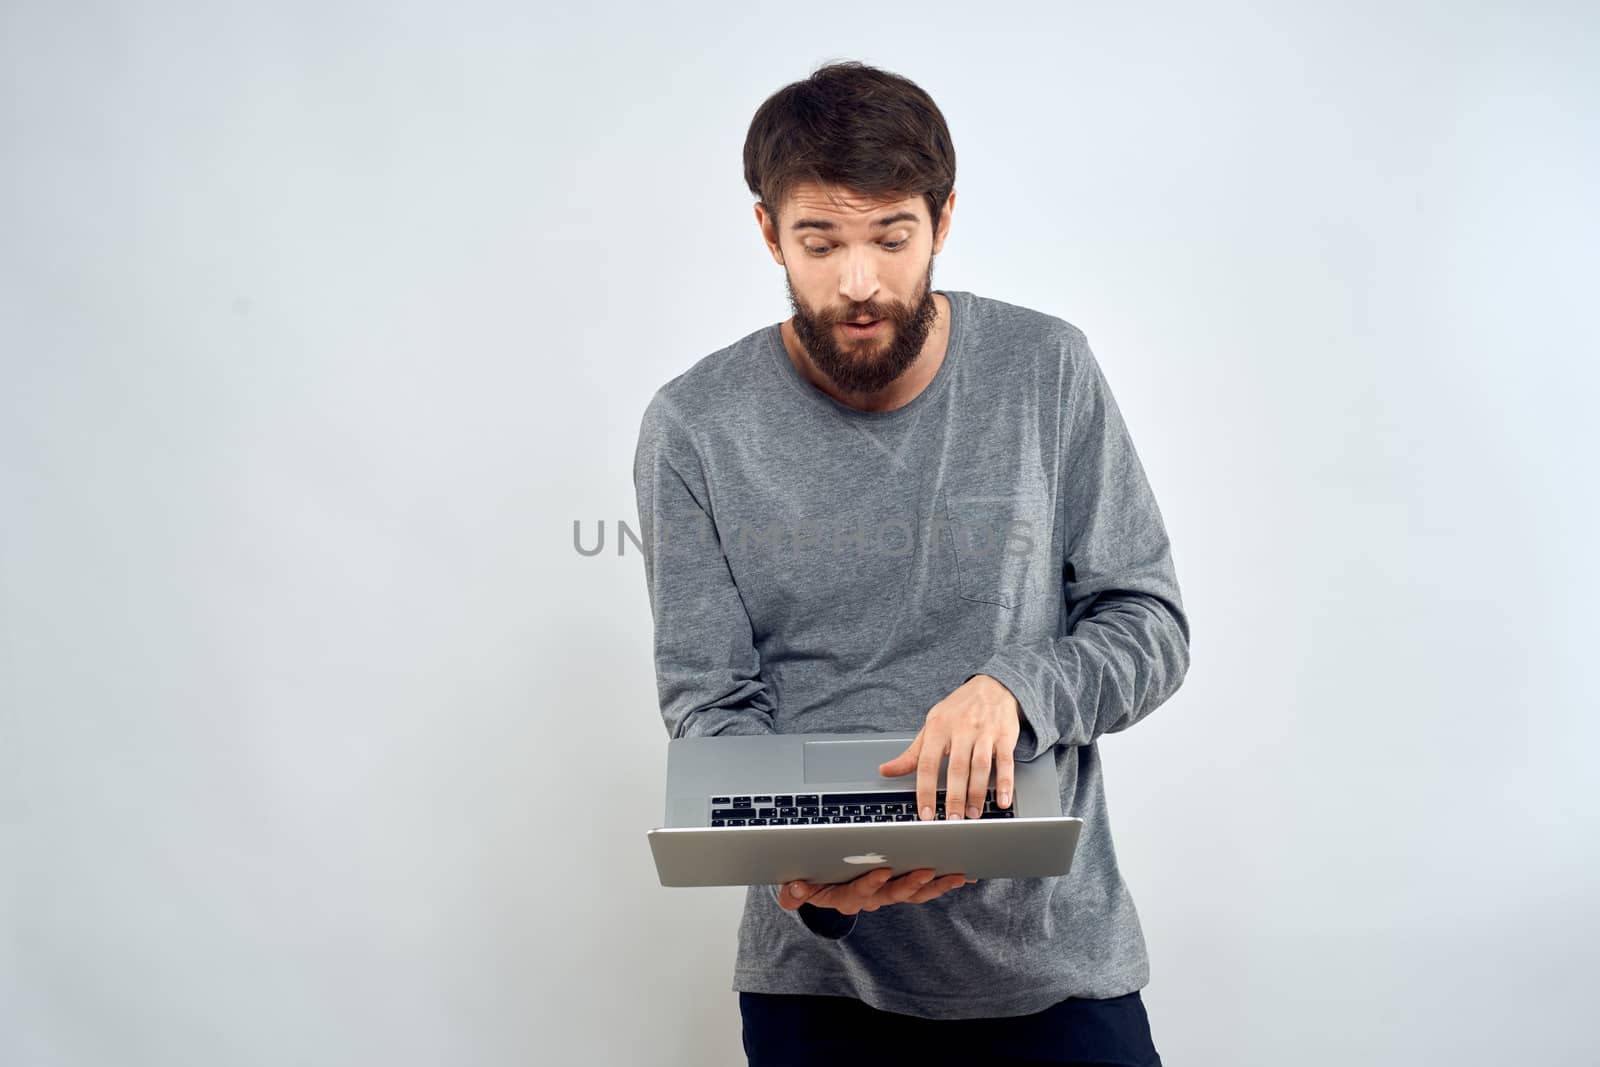 A man holding a laptop internet communication lifestyle technology light background studio by SHOTPRIME